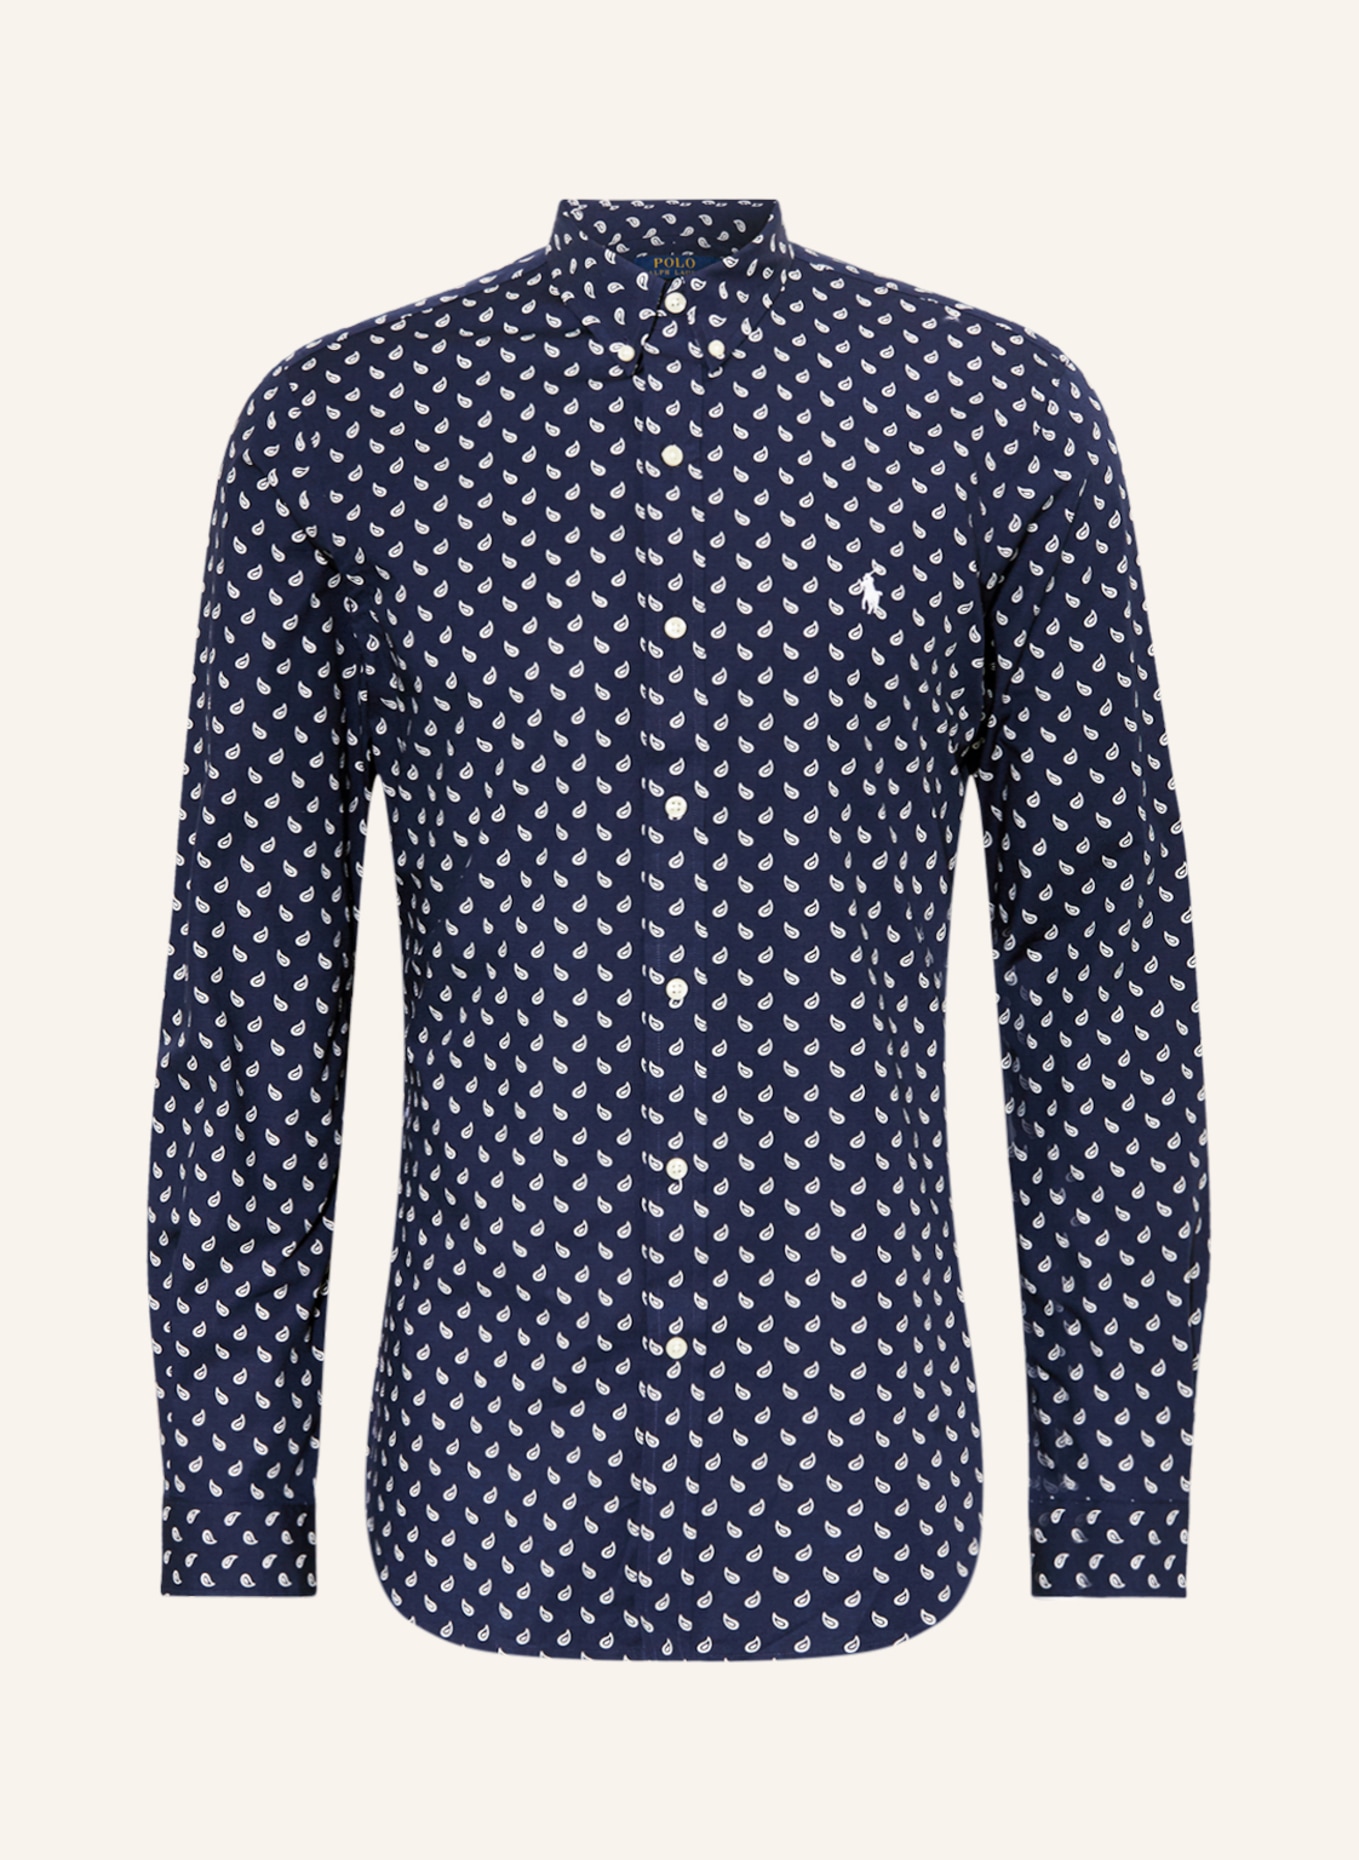 POLO RALPH LAUREN Hemd Slim Fit, Farbe: DUNKELBLAU/ WEISS (Bild 1)